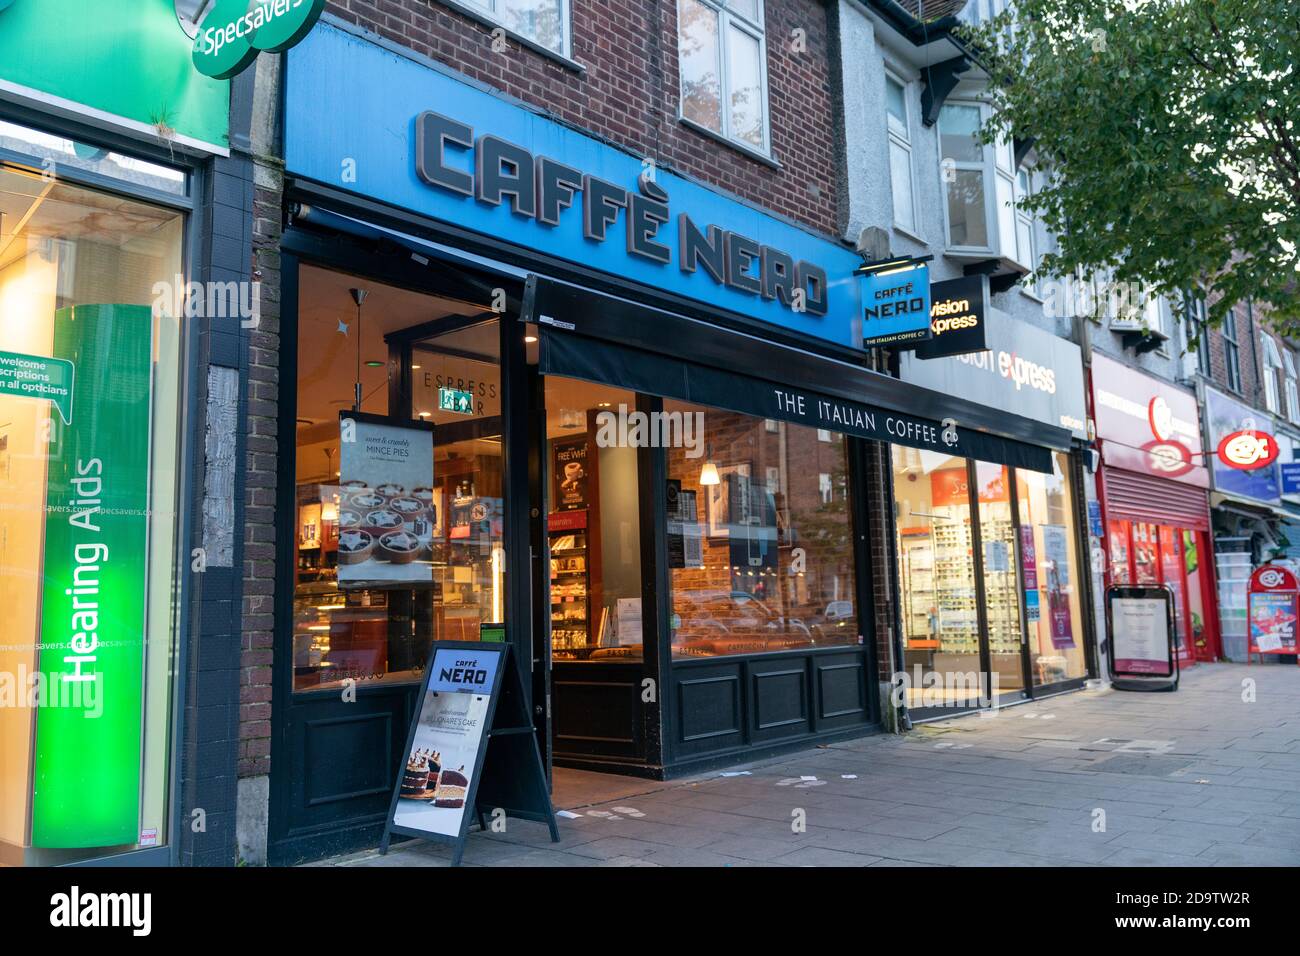 LONDON, ENGLAND - NOVEMBER 7, 2020:  A Caffè Nero coffee shop branch in Ruislip, London during the COVID-19 lockdown 2.0 pandemic - 002 Stock Photo